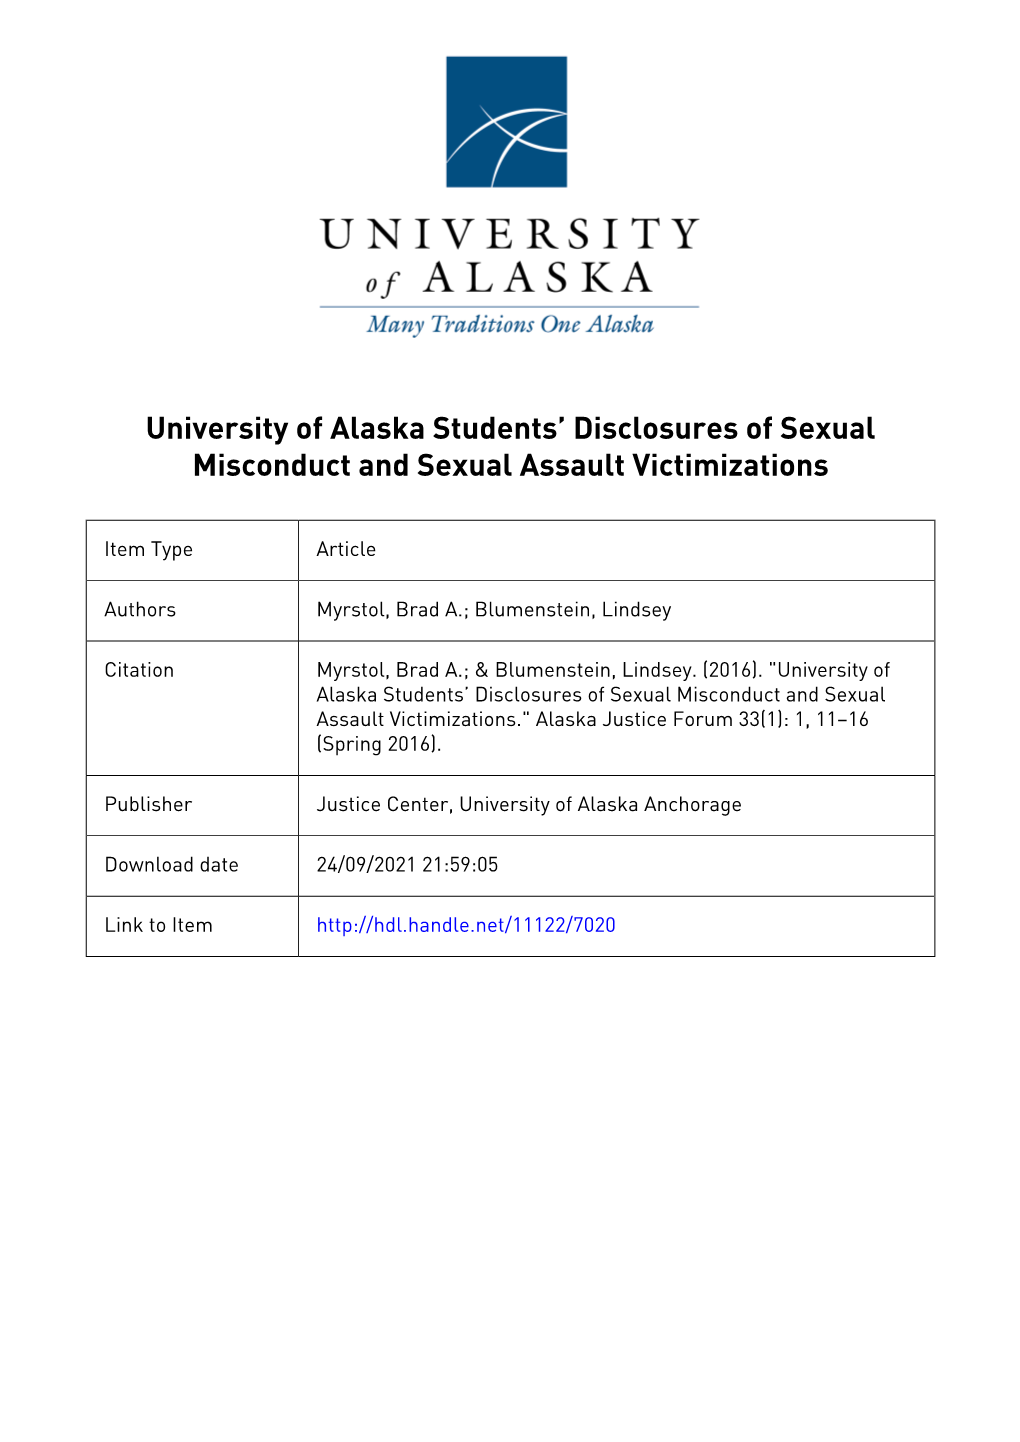 University of Alaska Students' Disclosures of Sexual Misconduct and Sexual Assault Victimizations